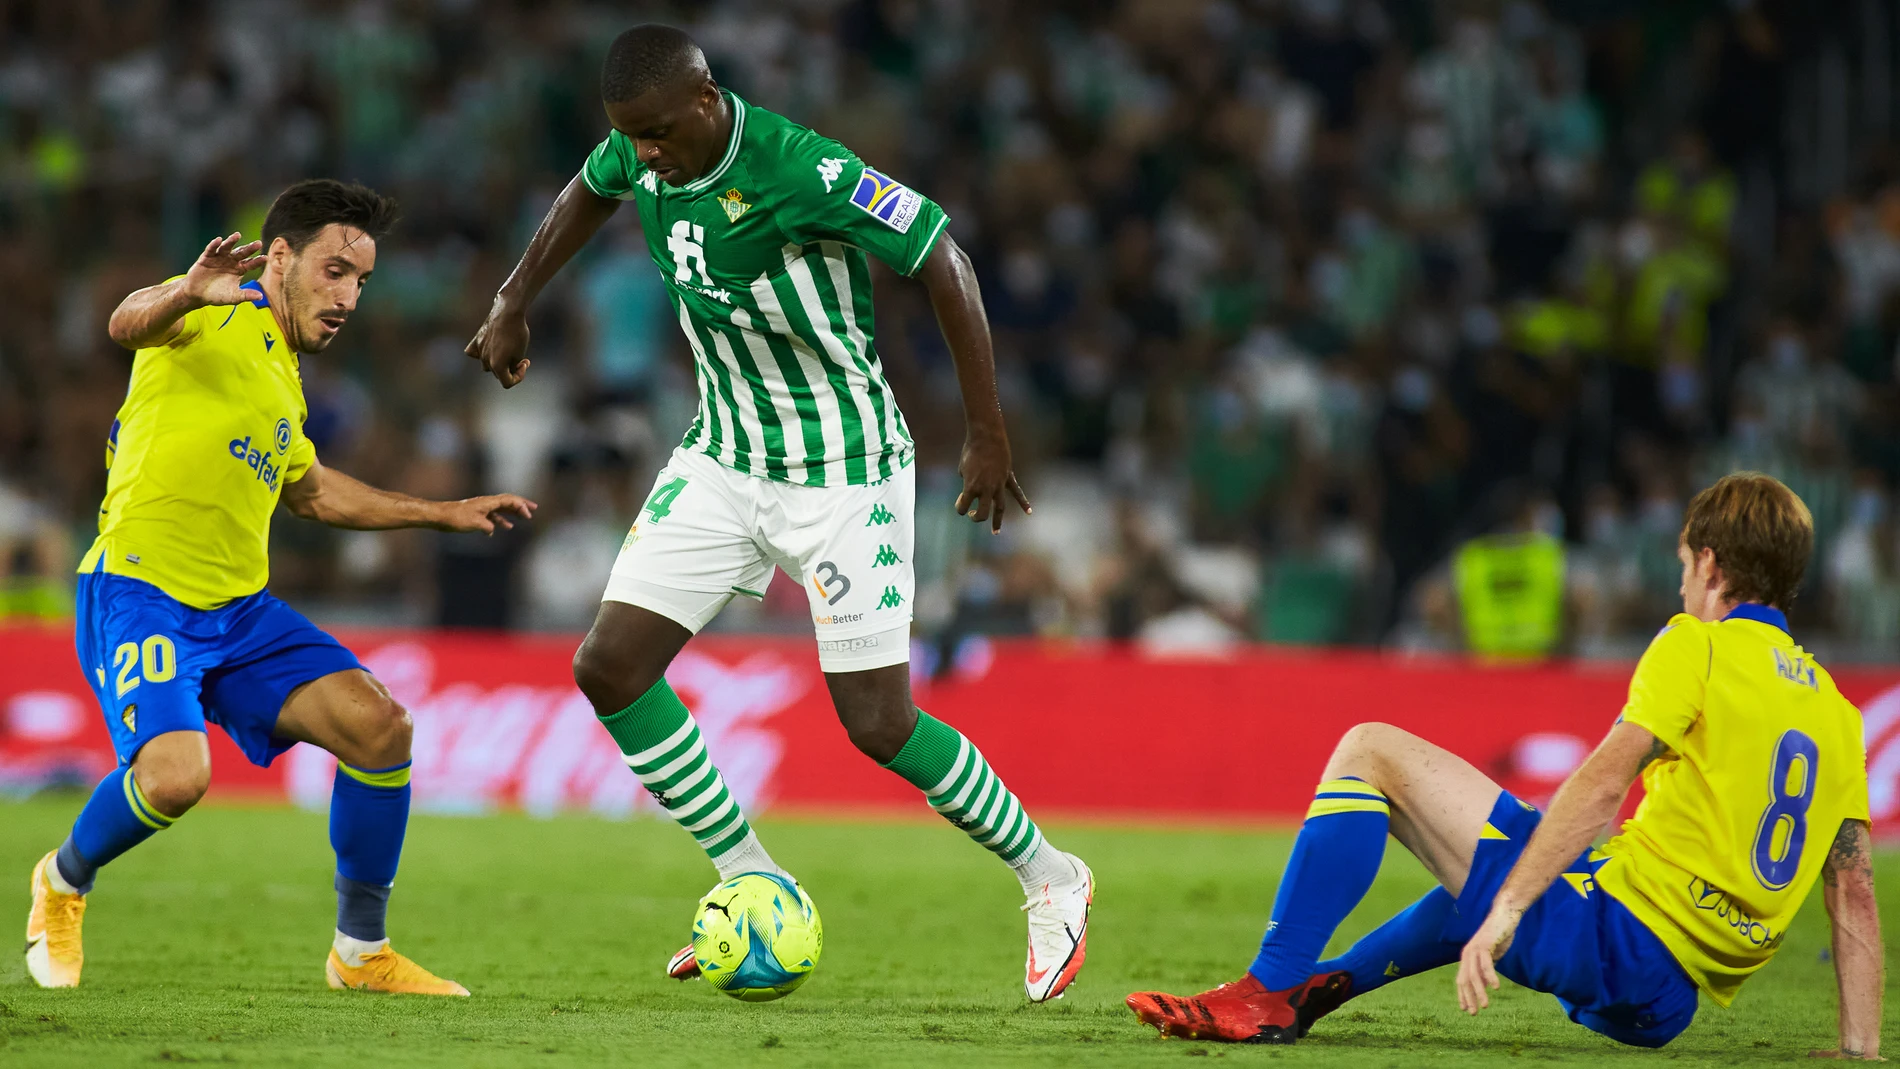 William Carvalho entre jugadores del Cádiz. AFP7